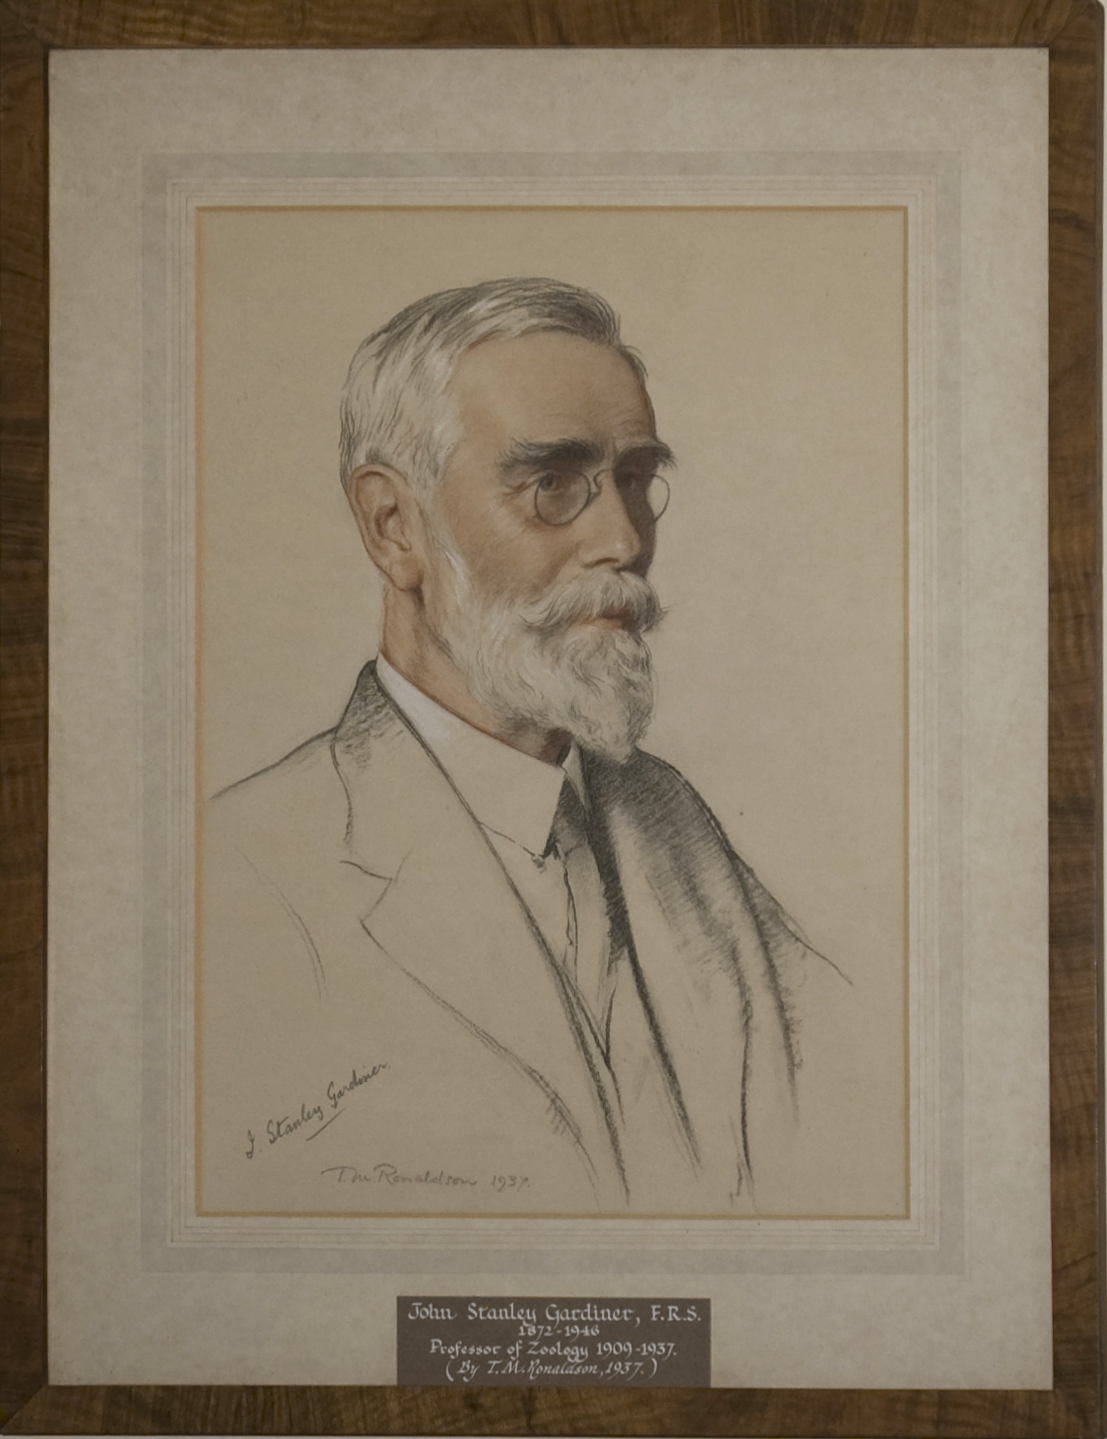 A painting of John Stanley Gardiner